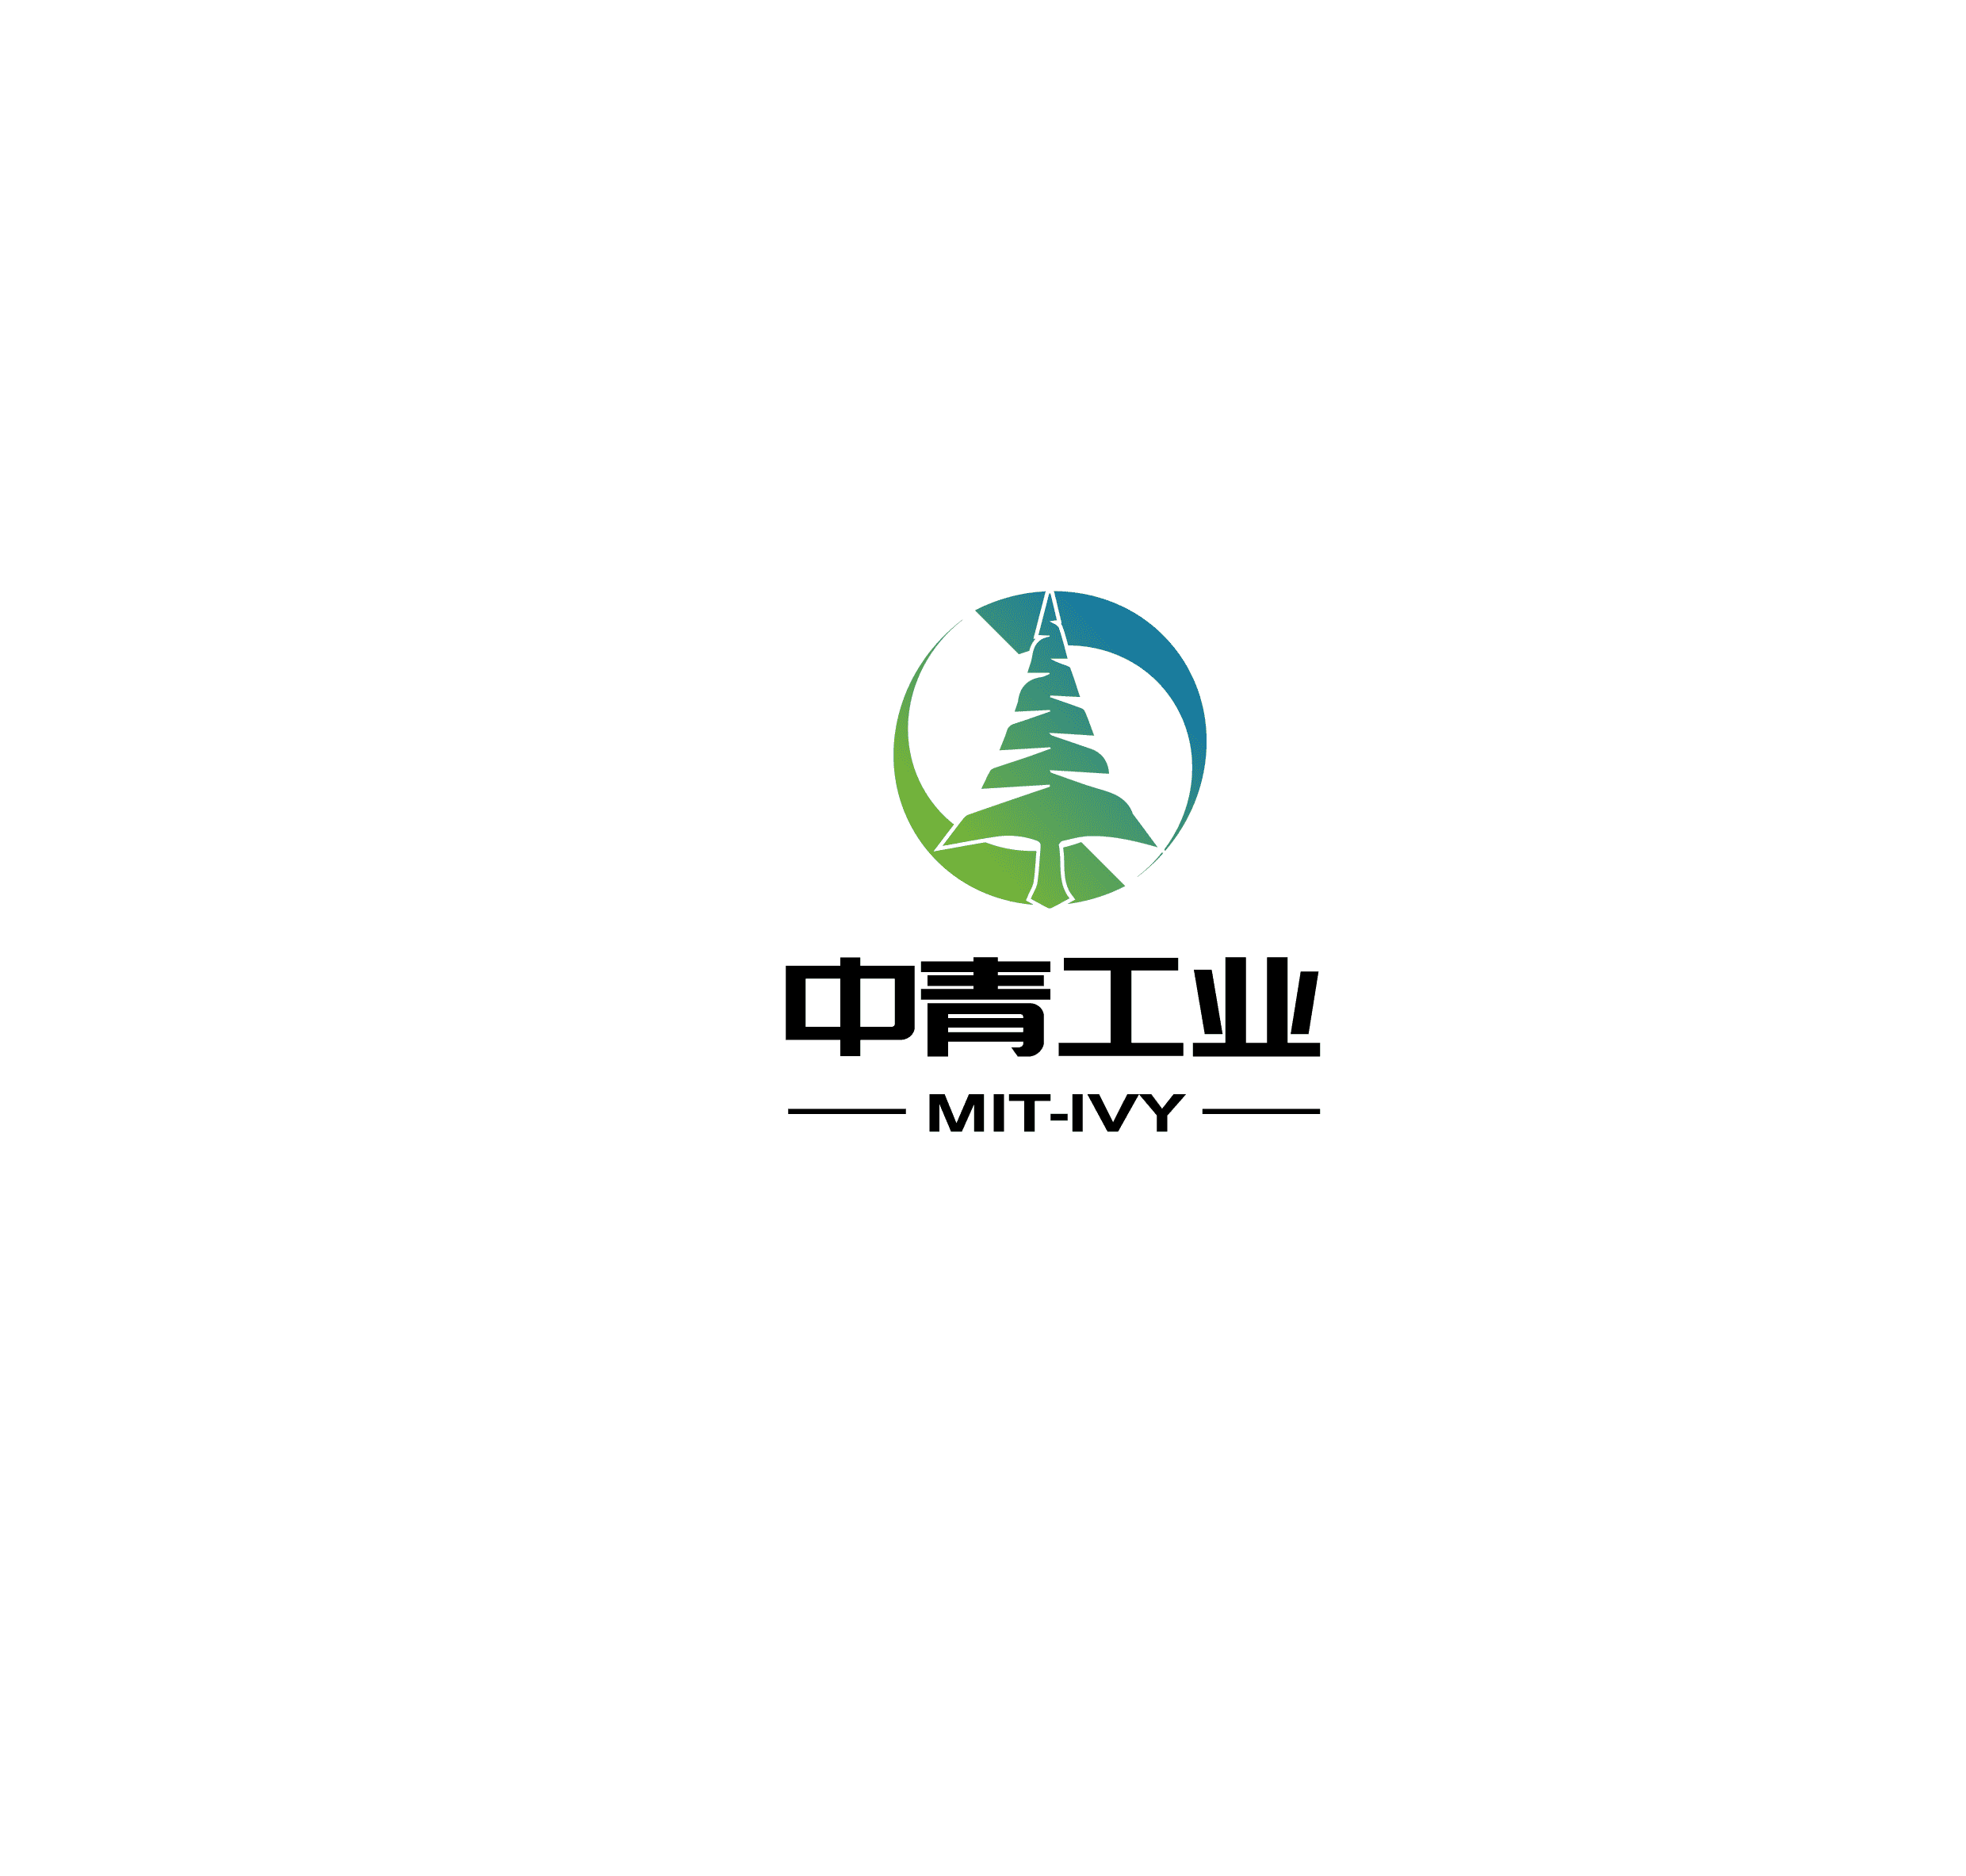 Tíu, litarefni milliefni —Mit-Ivy Industry co., Ltd